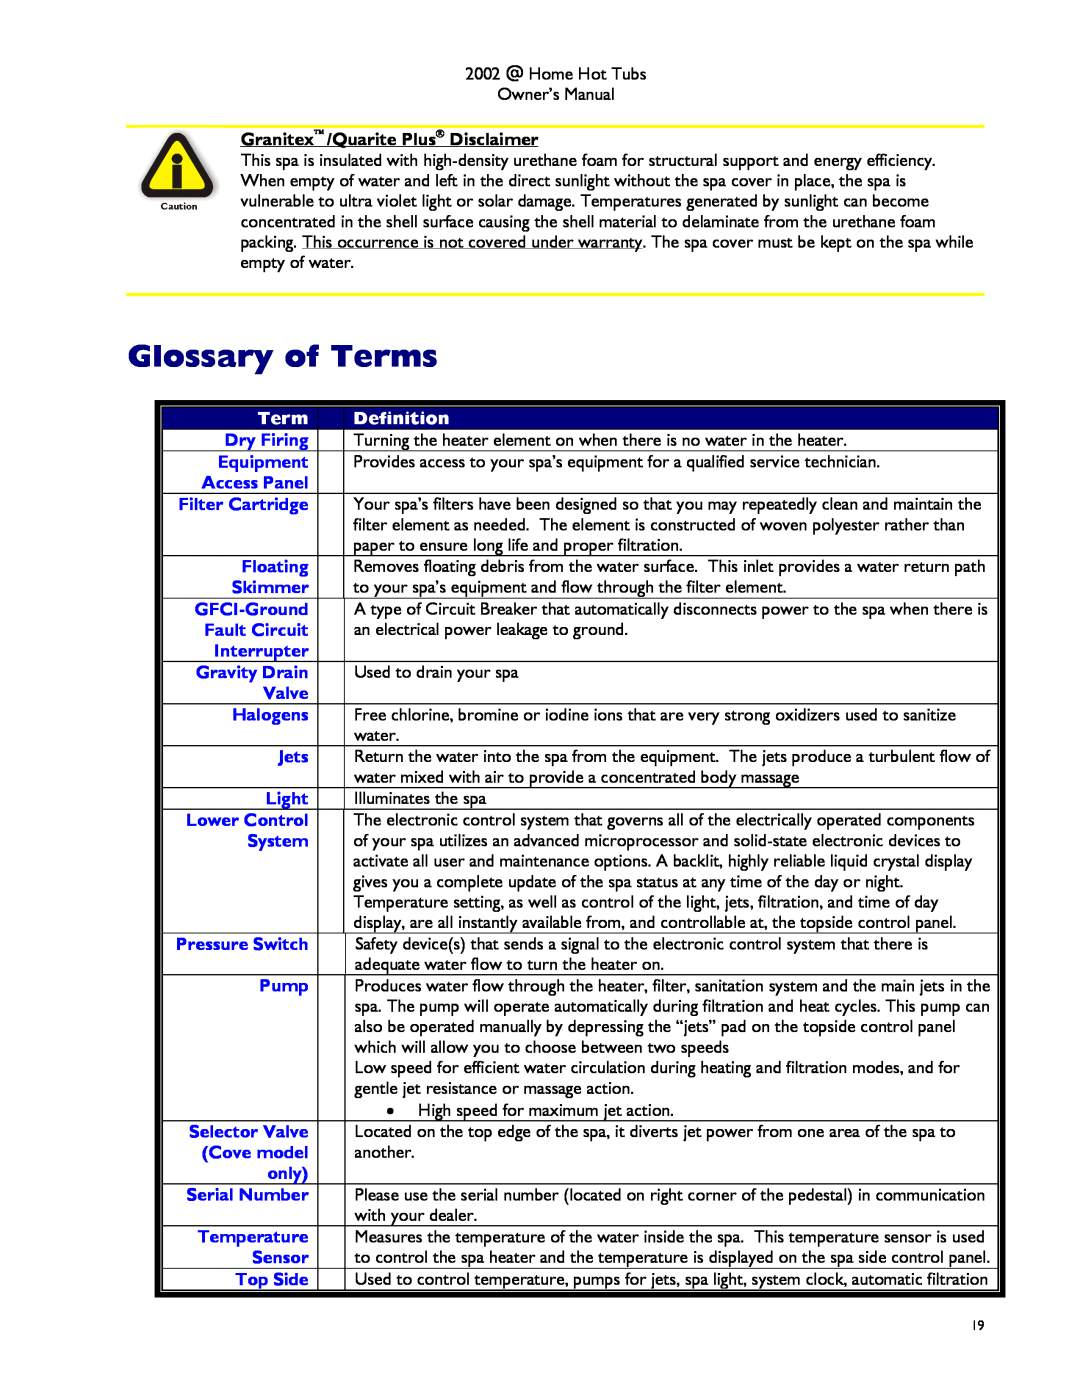 Dimension One Spas Cove, Dream HP manual Glossary of Terms, Granitex /Quarite Plus Disclaimer, Definition 